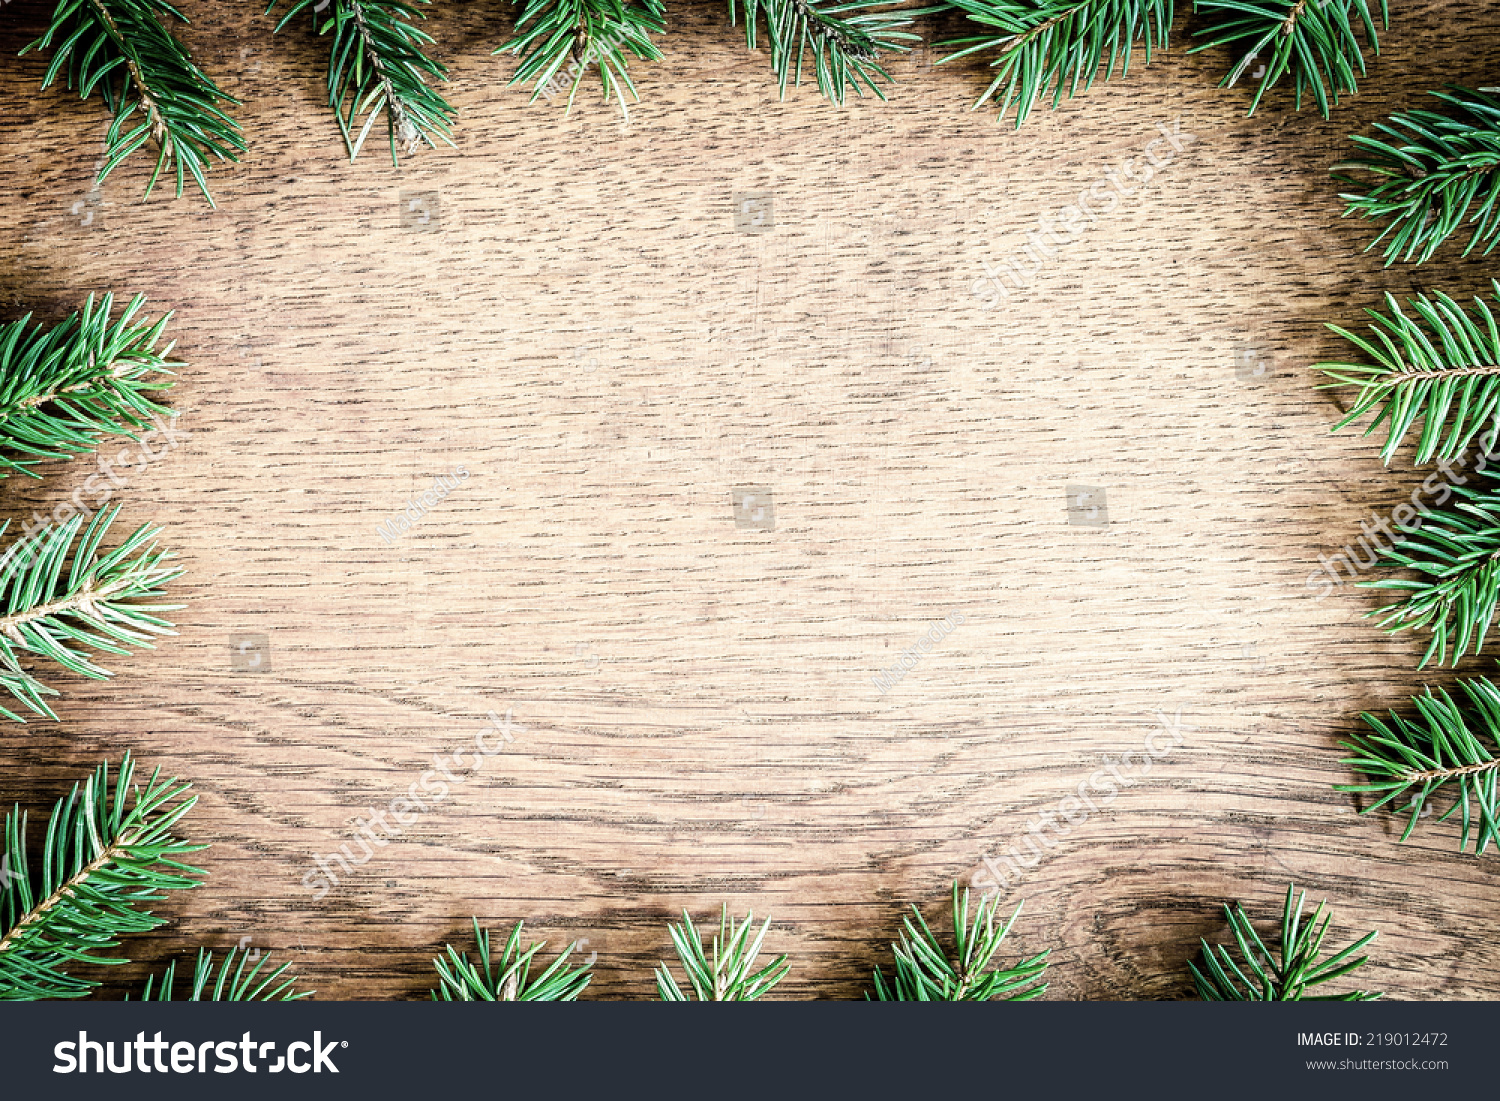 Christmas fir tree on a wooden board #219012472